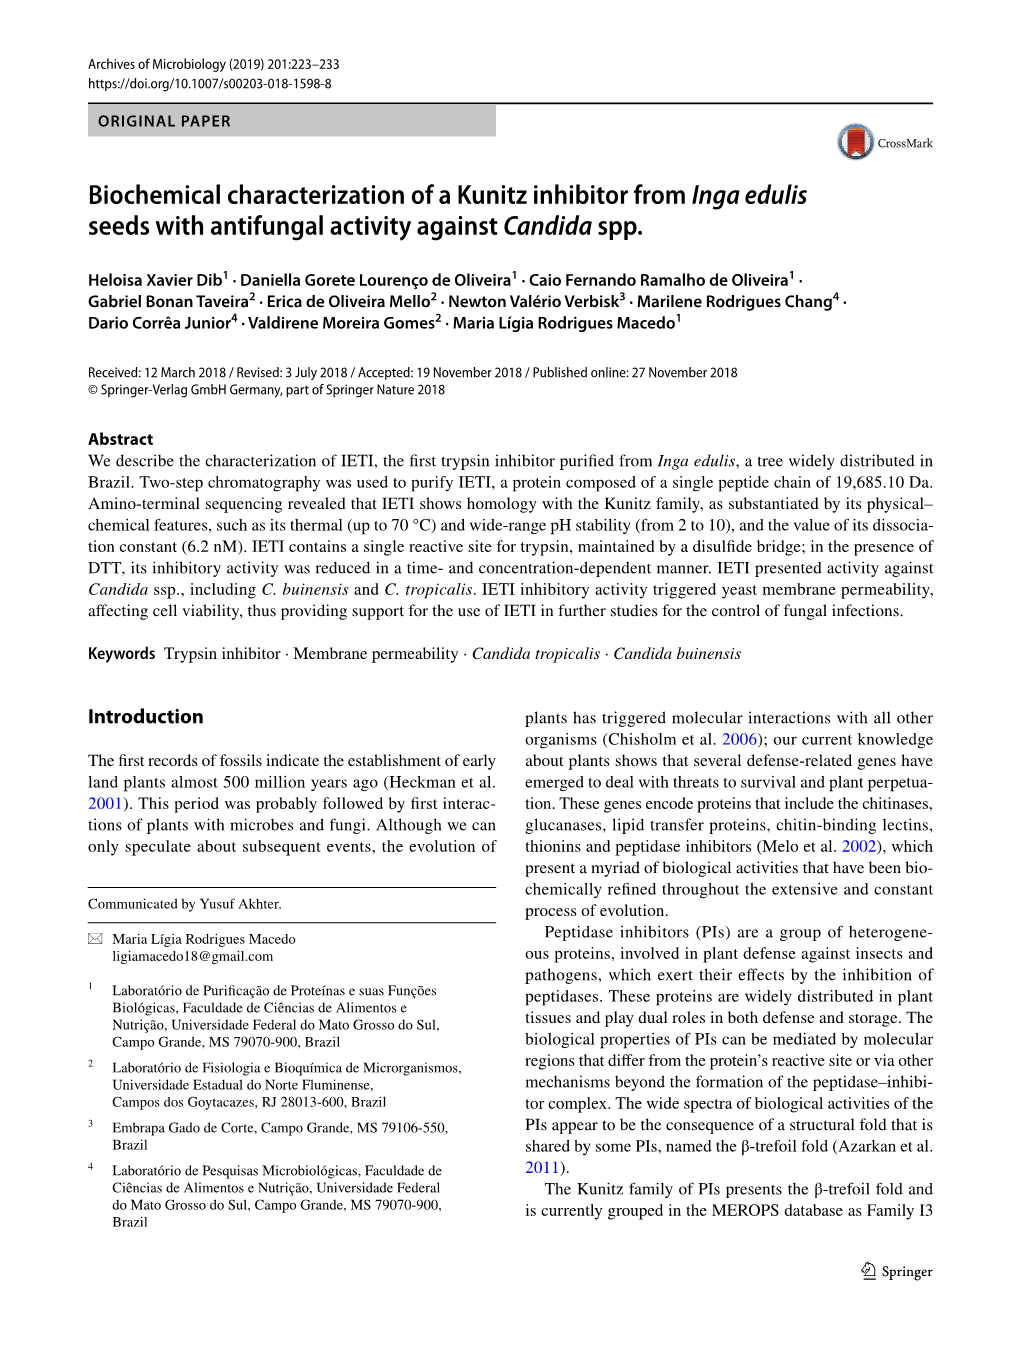 Biochemical Characterization of a Kunitz Inhibitor from Inga Edulis Seeds with Antifungal Activity Against Candida Spp